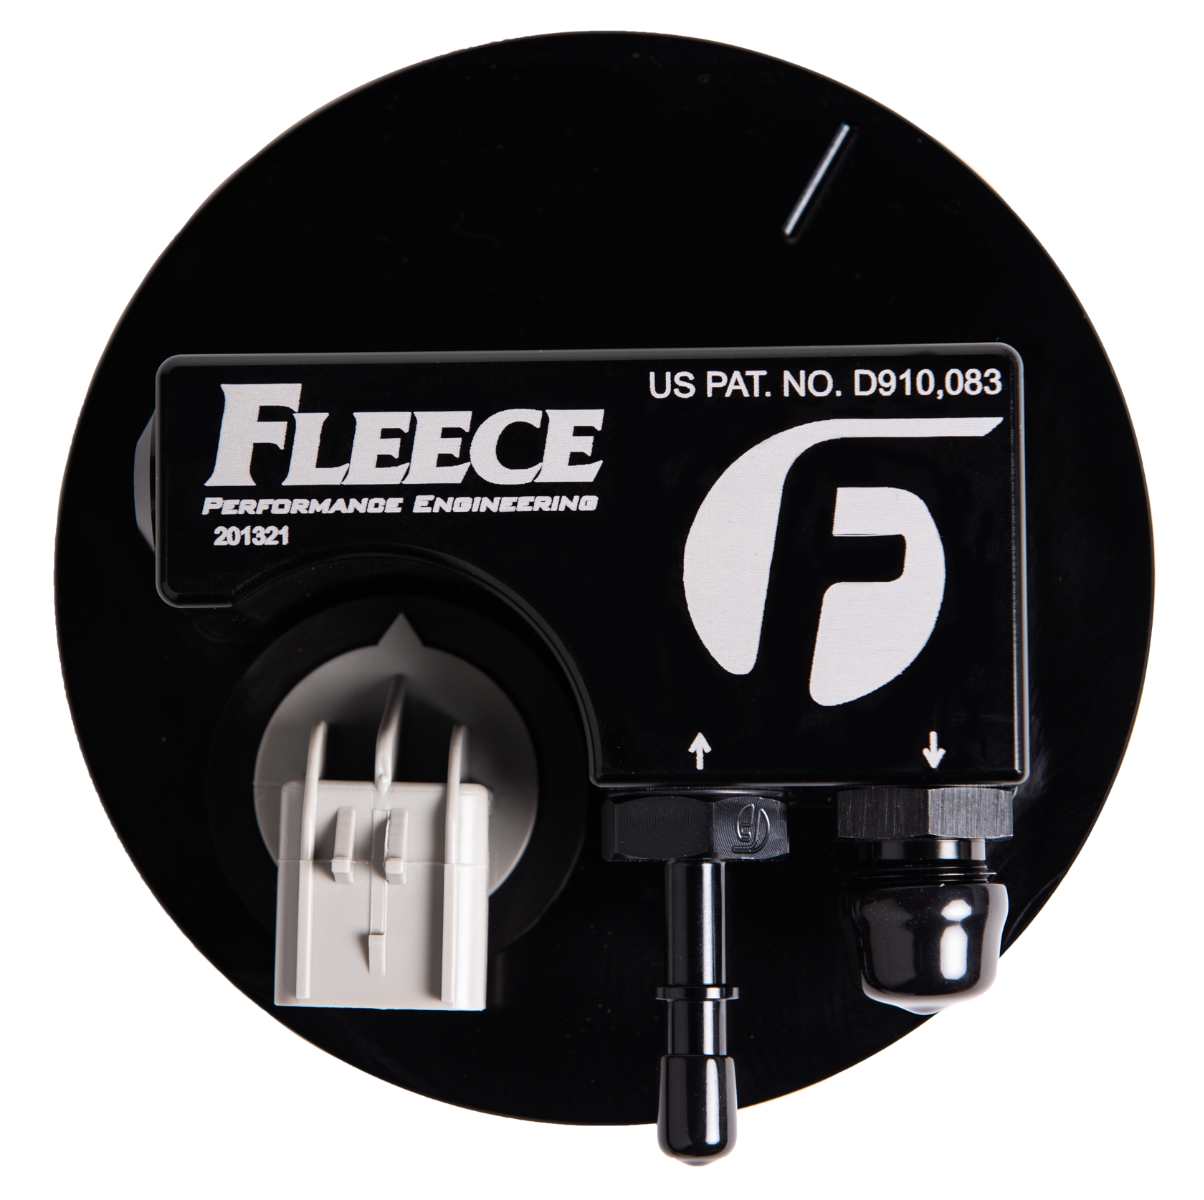 Fleece Performance PowerFlo Lift Pump for 1998 Dodge with 12-valve Cummins FPE-PF-CUMM-98-12V